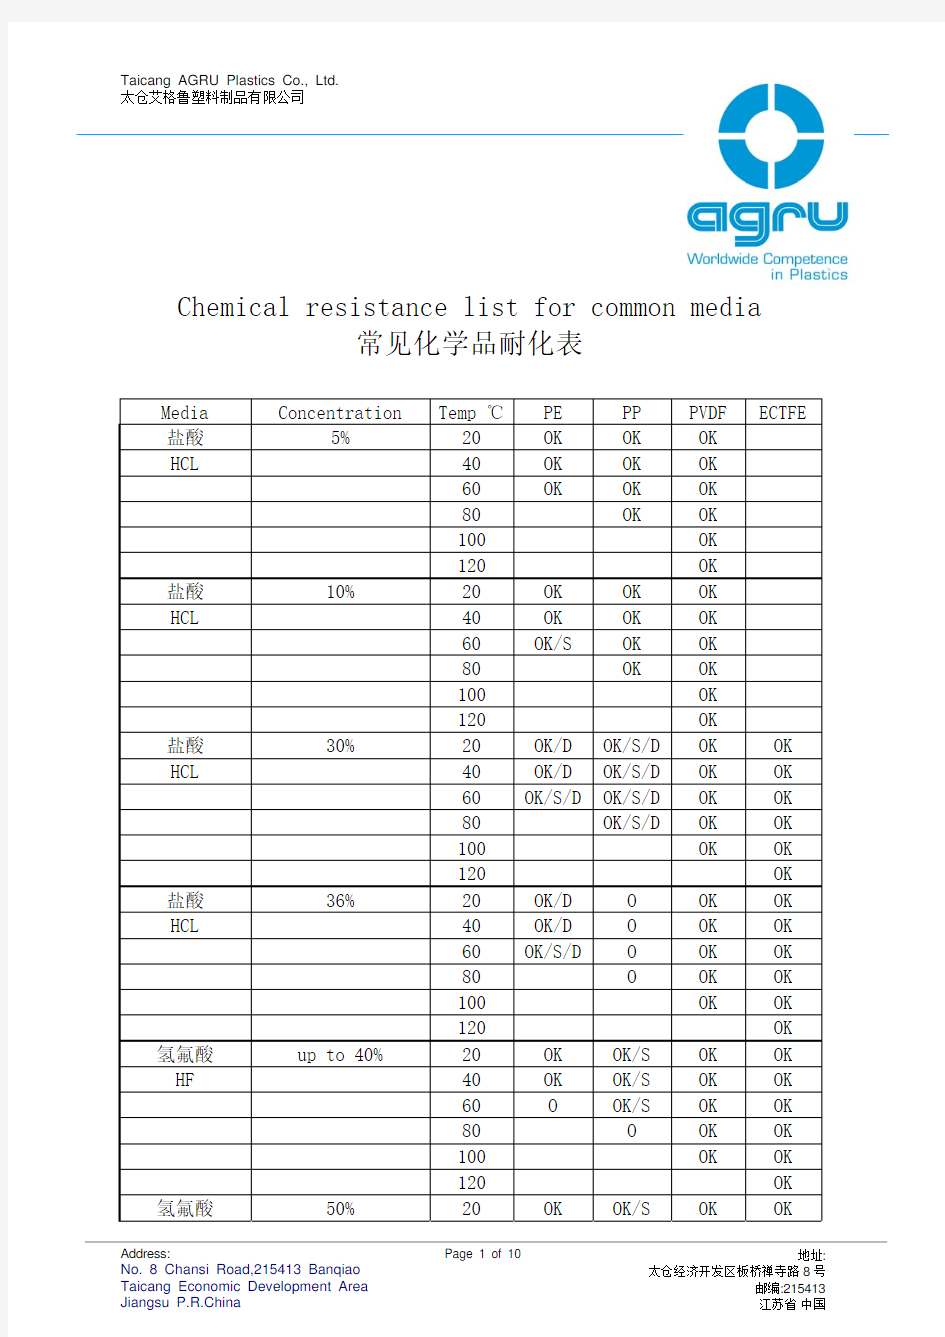 常见化学品耐化表(Chemical resistance list)